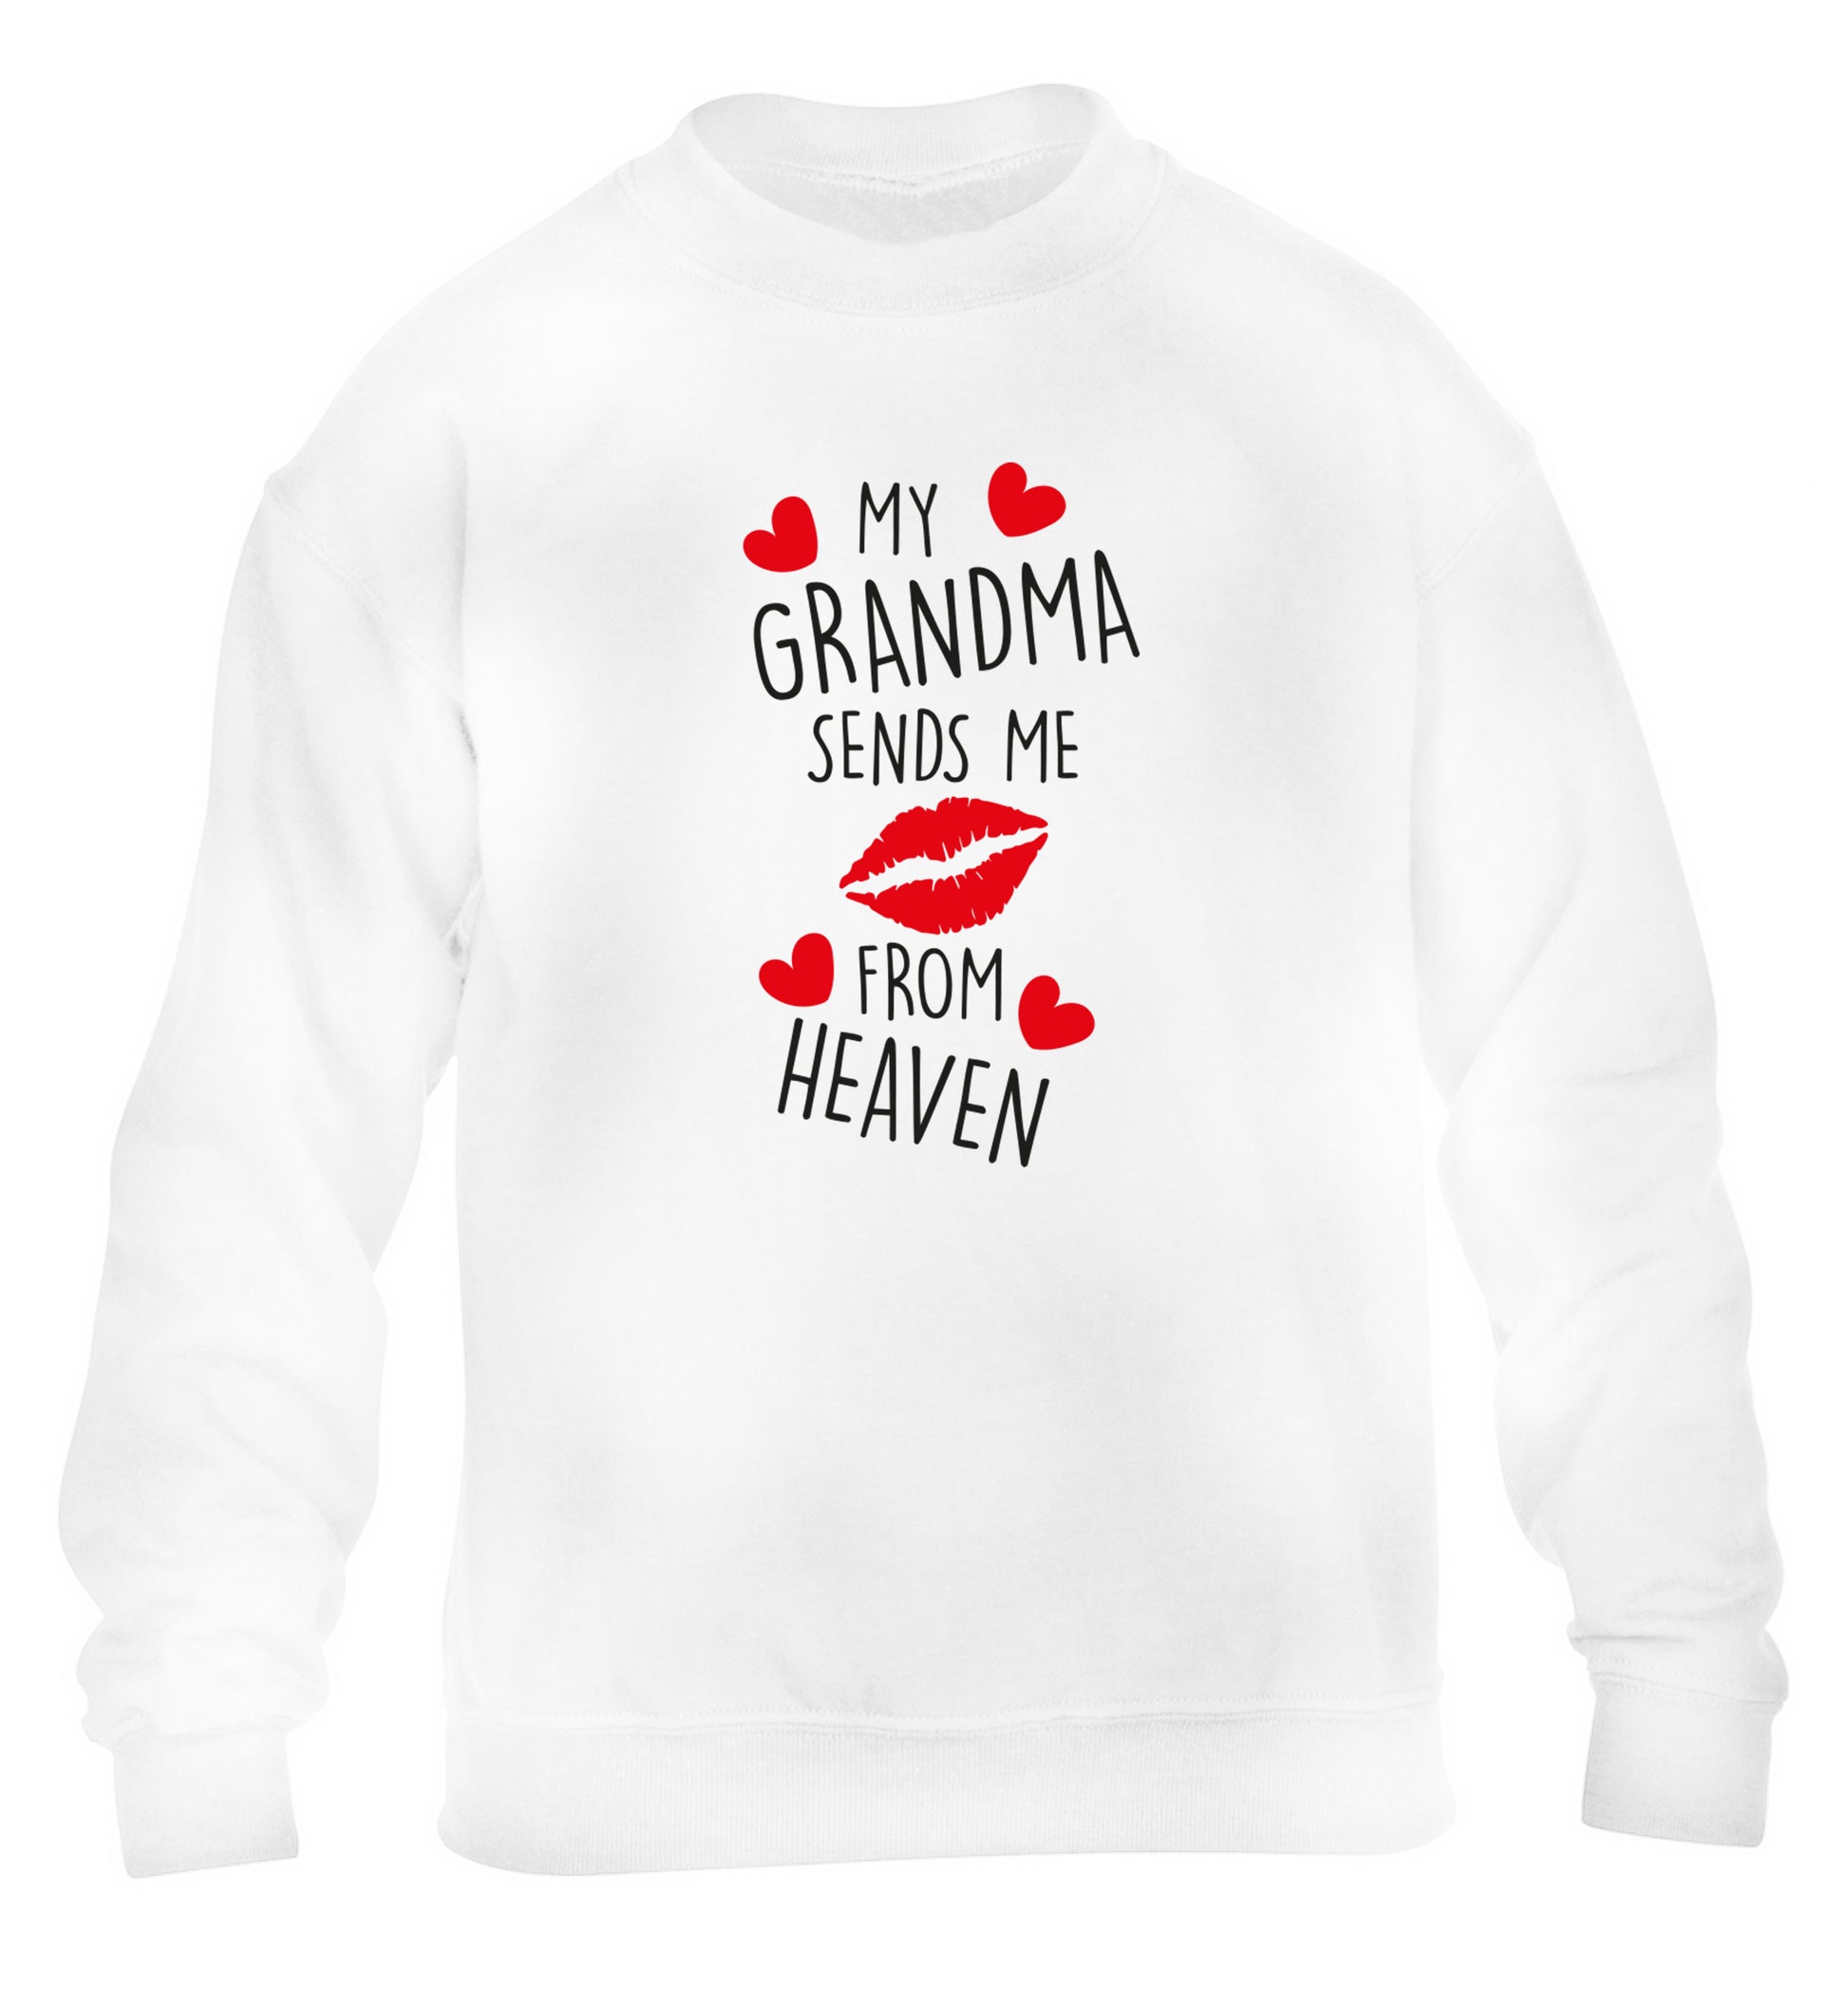 My grandma sends me kisses from heaven children's white sweater 12-14 Years